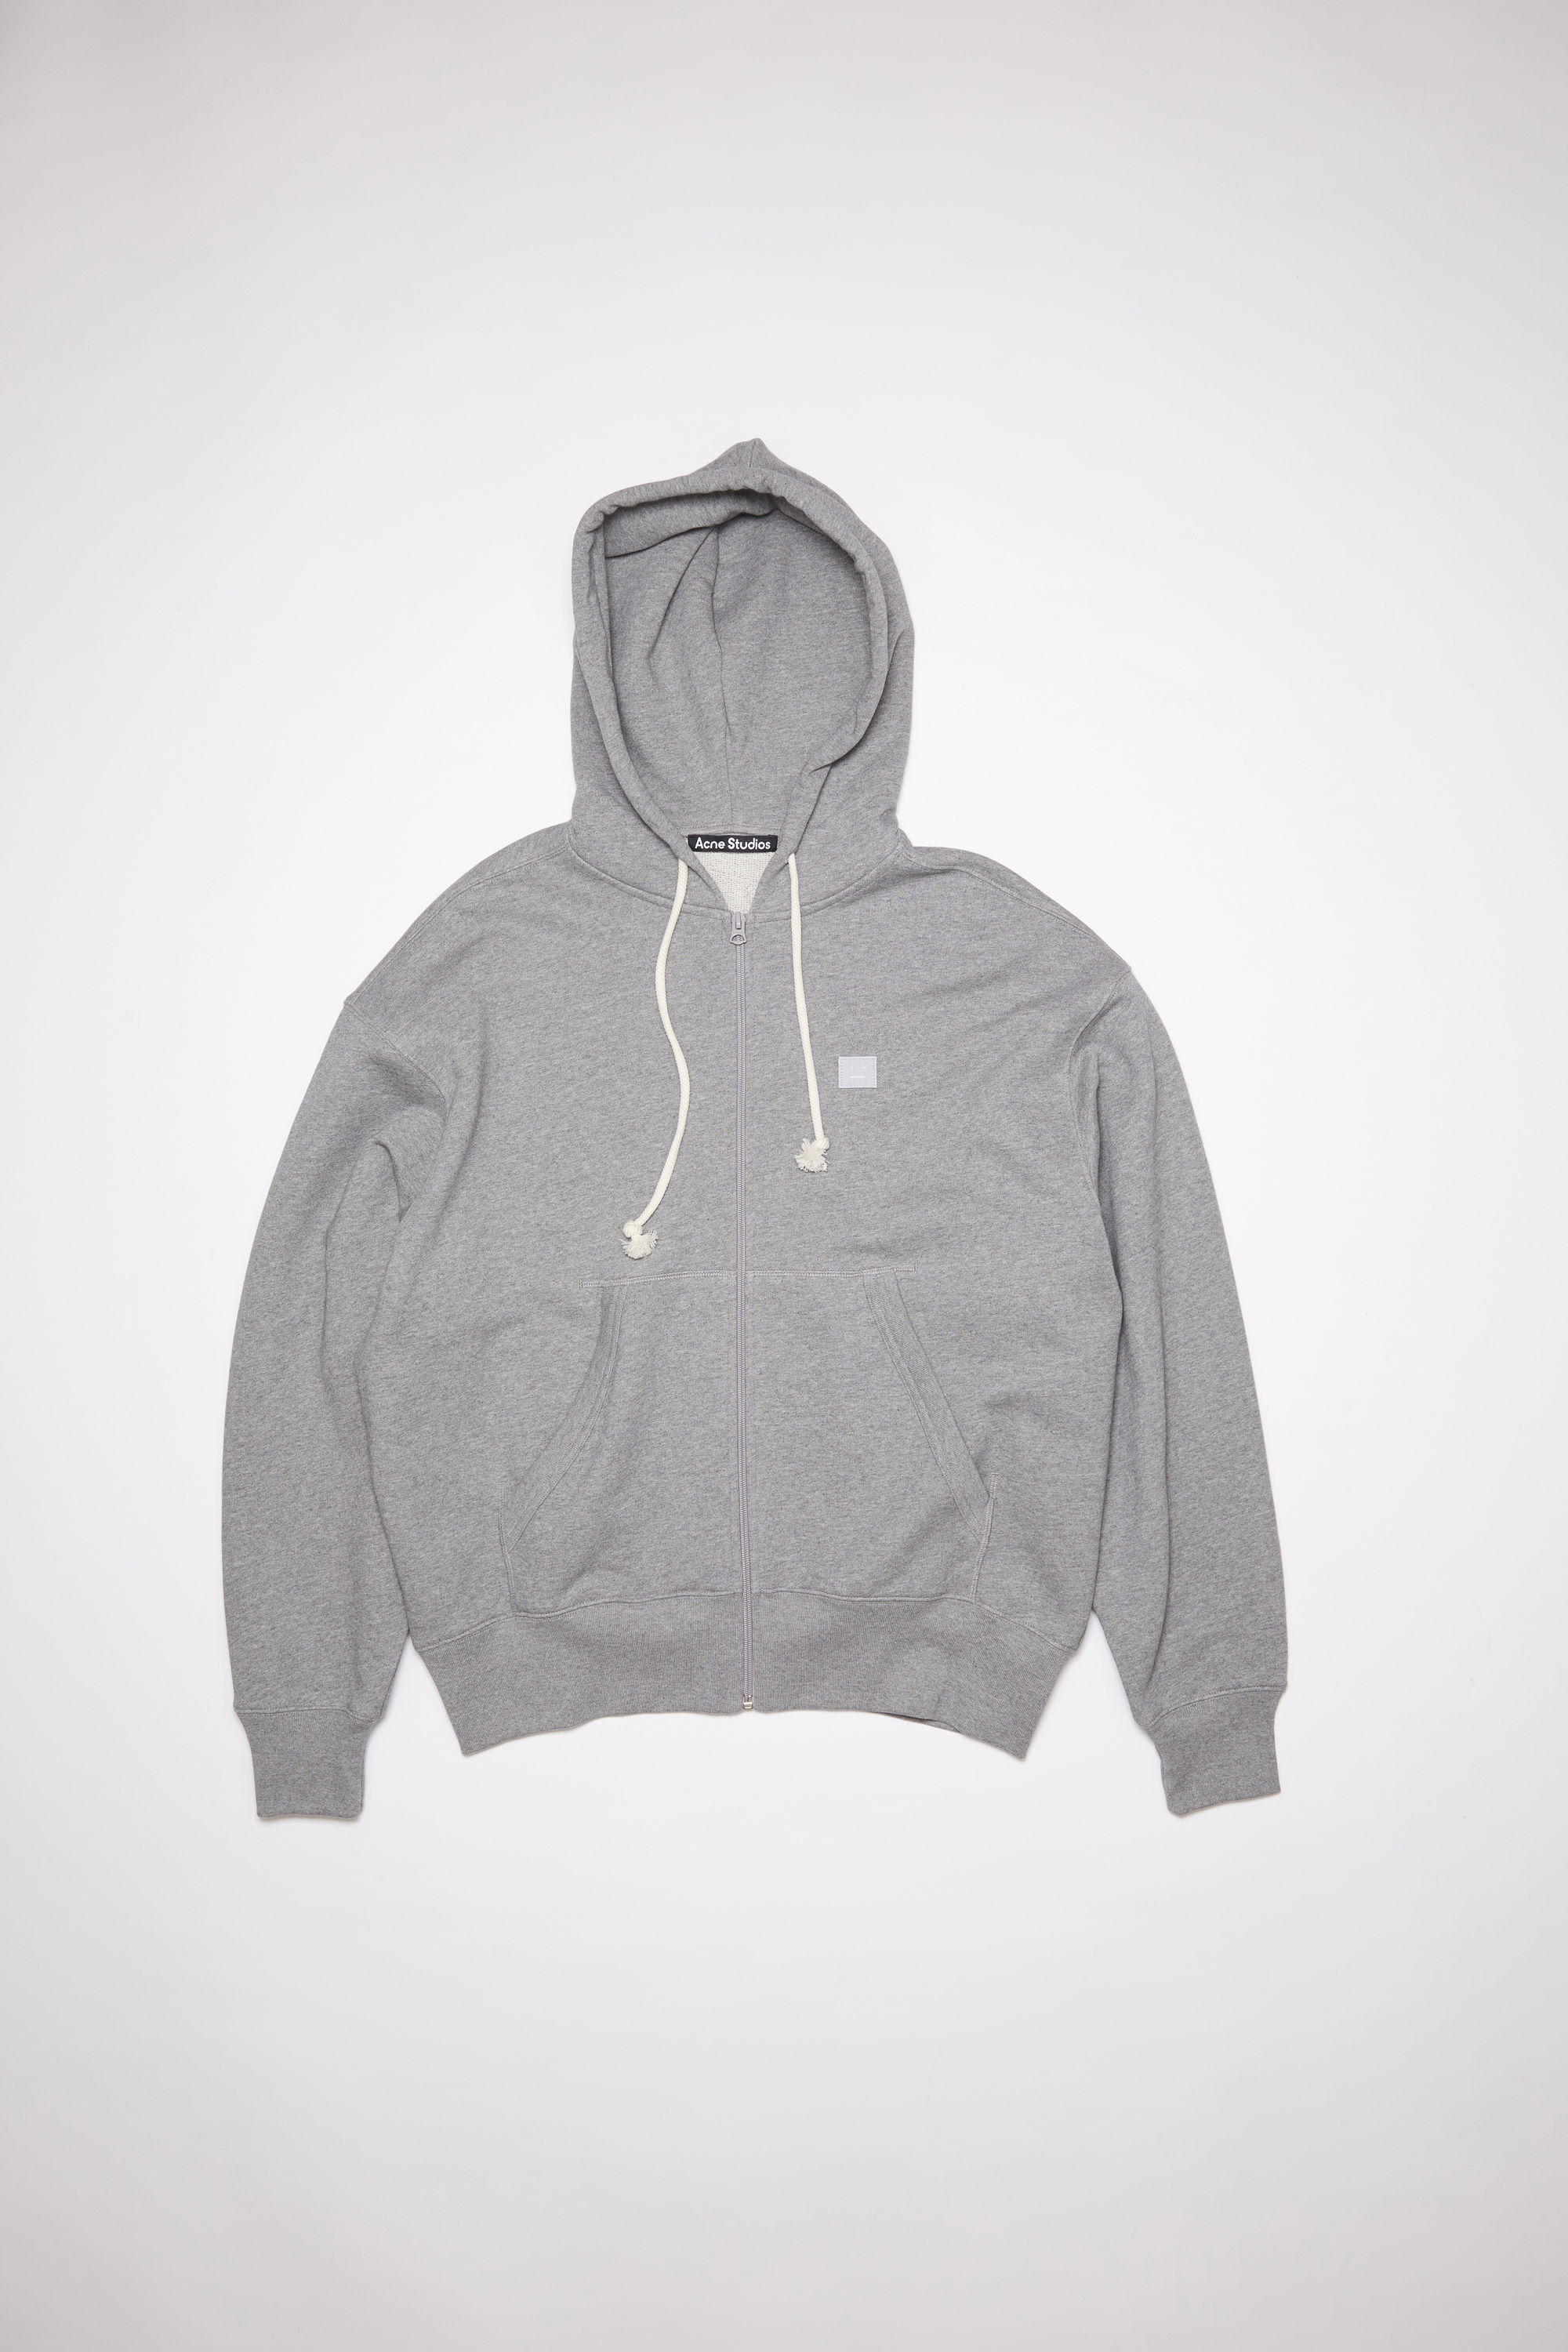 Acne Studios Hooded Zippered Sweatshirt In Light Grey Melange